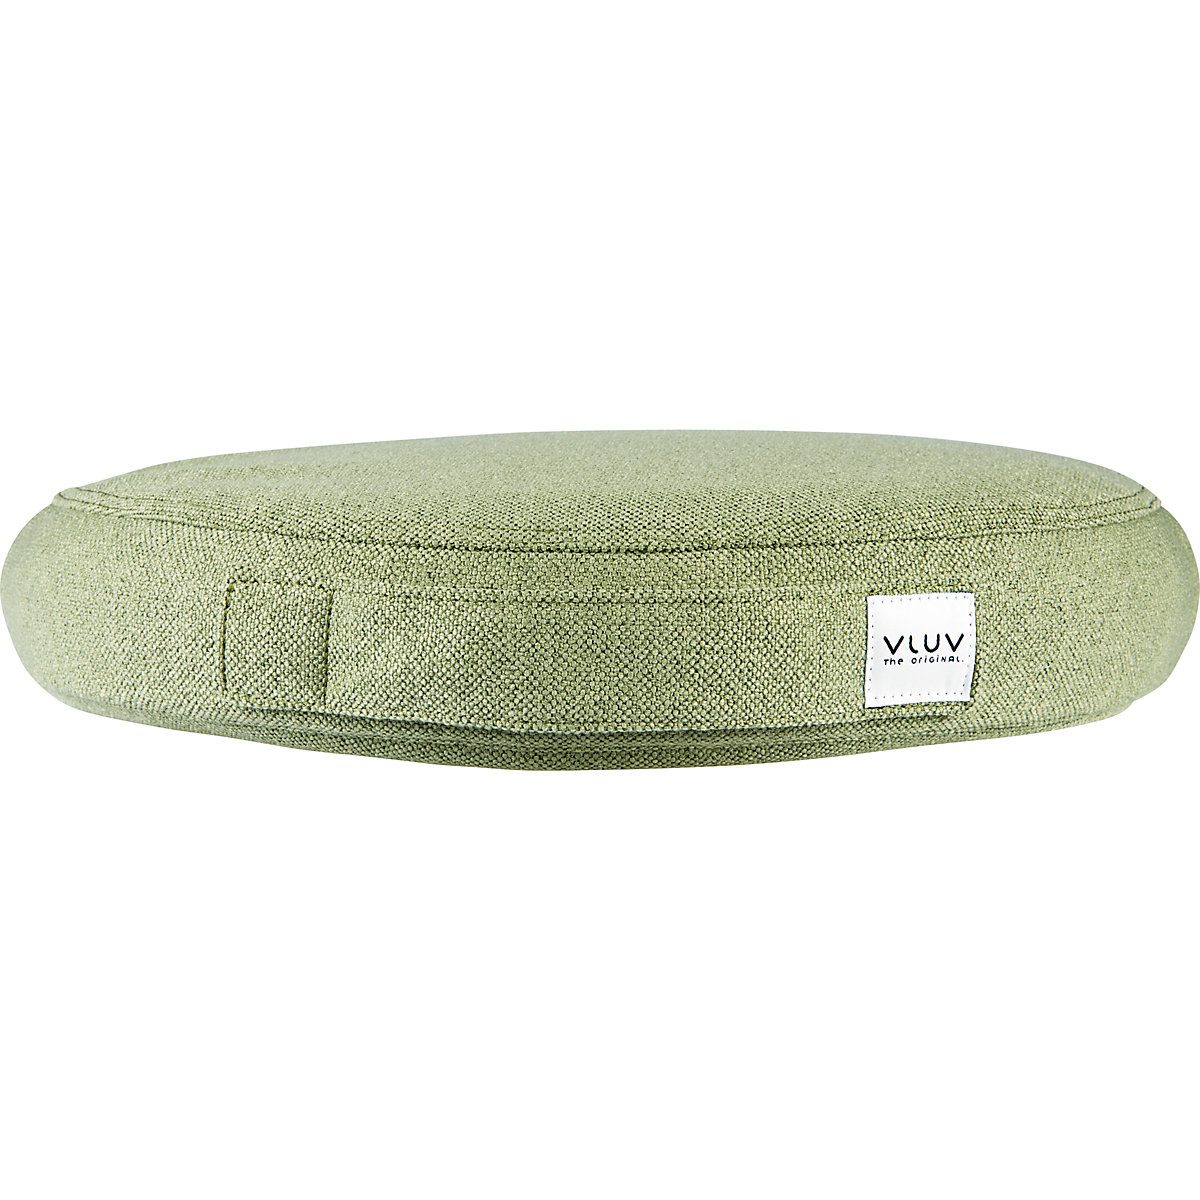 Jastuk za ravnotežu PIL&PED SOVA – VLUV (Prikaz proizvoda 22)-21